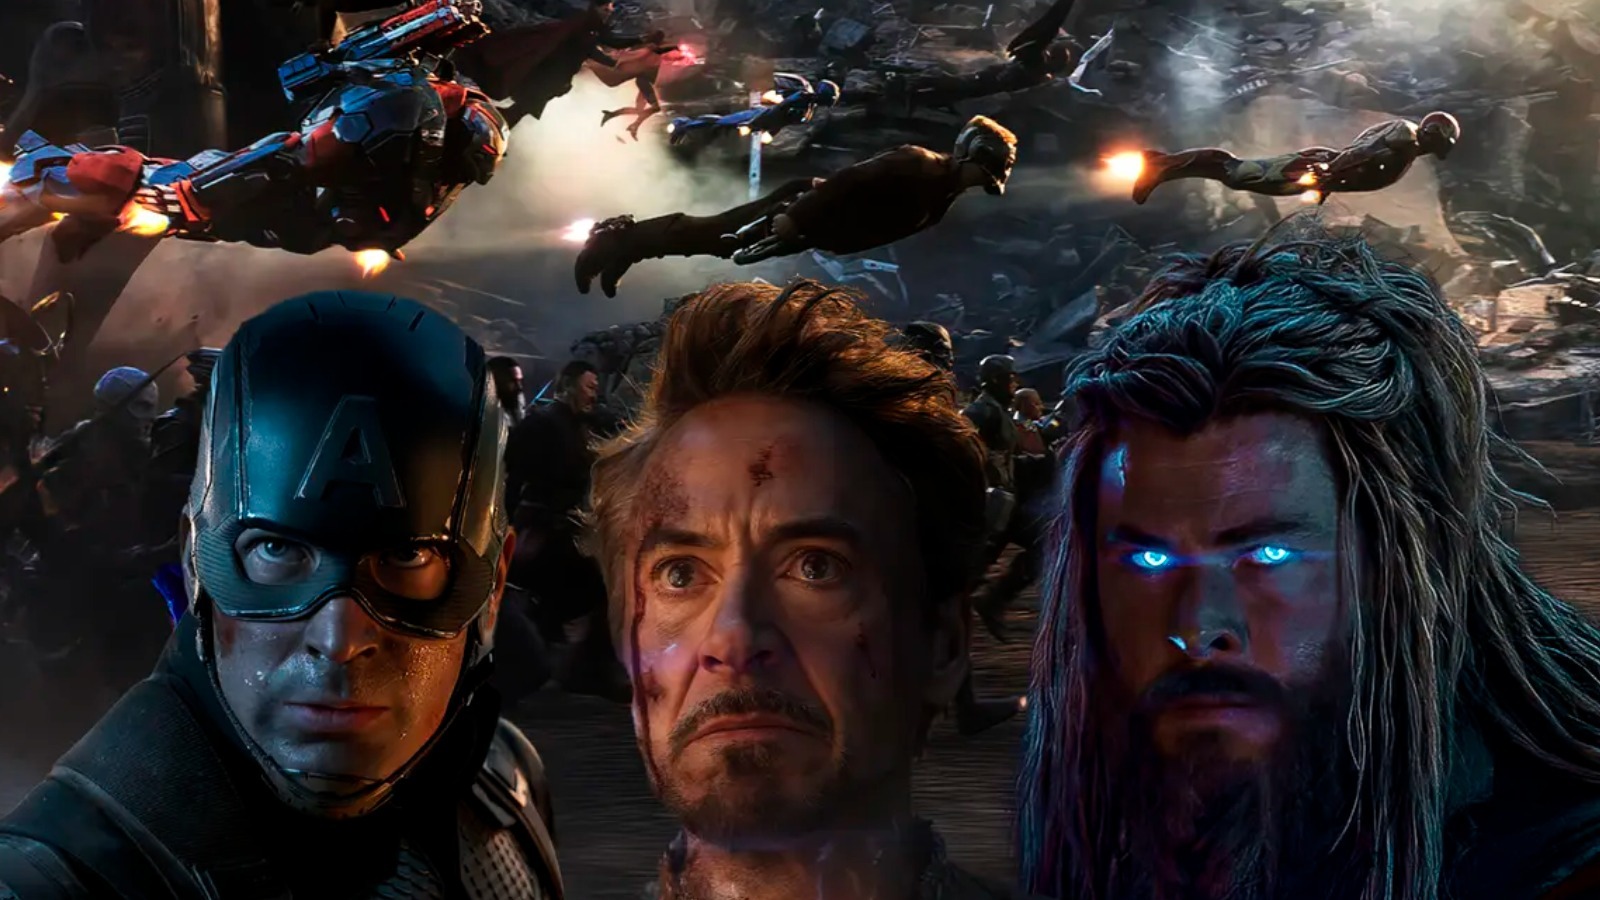 Avengers: Endgame: Is Marvel's new movie fun even you've never